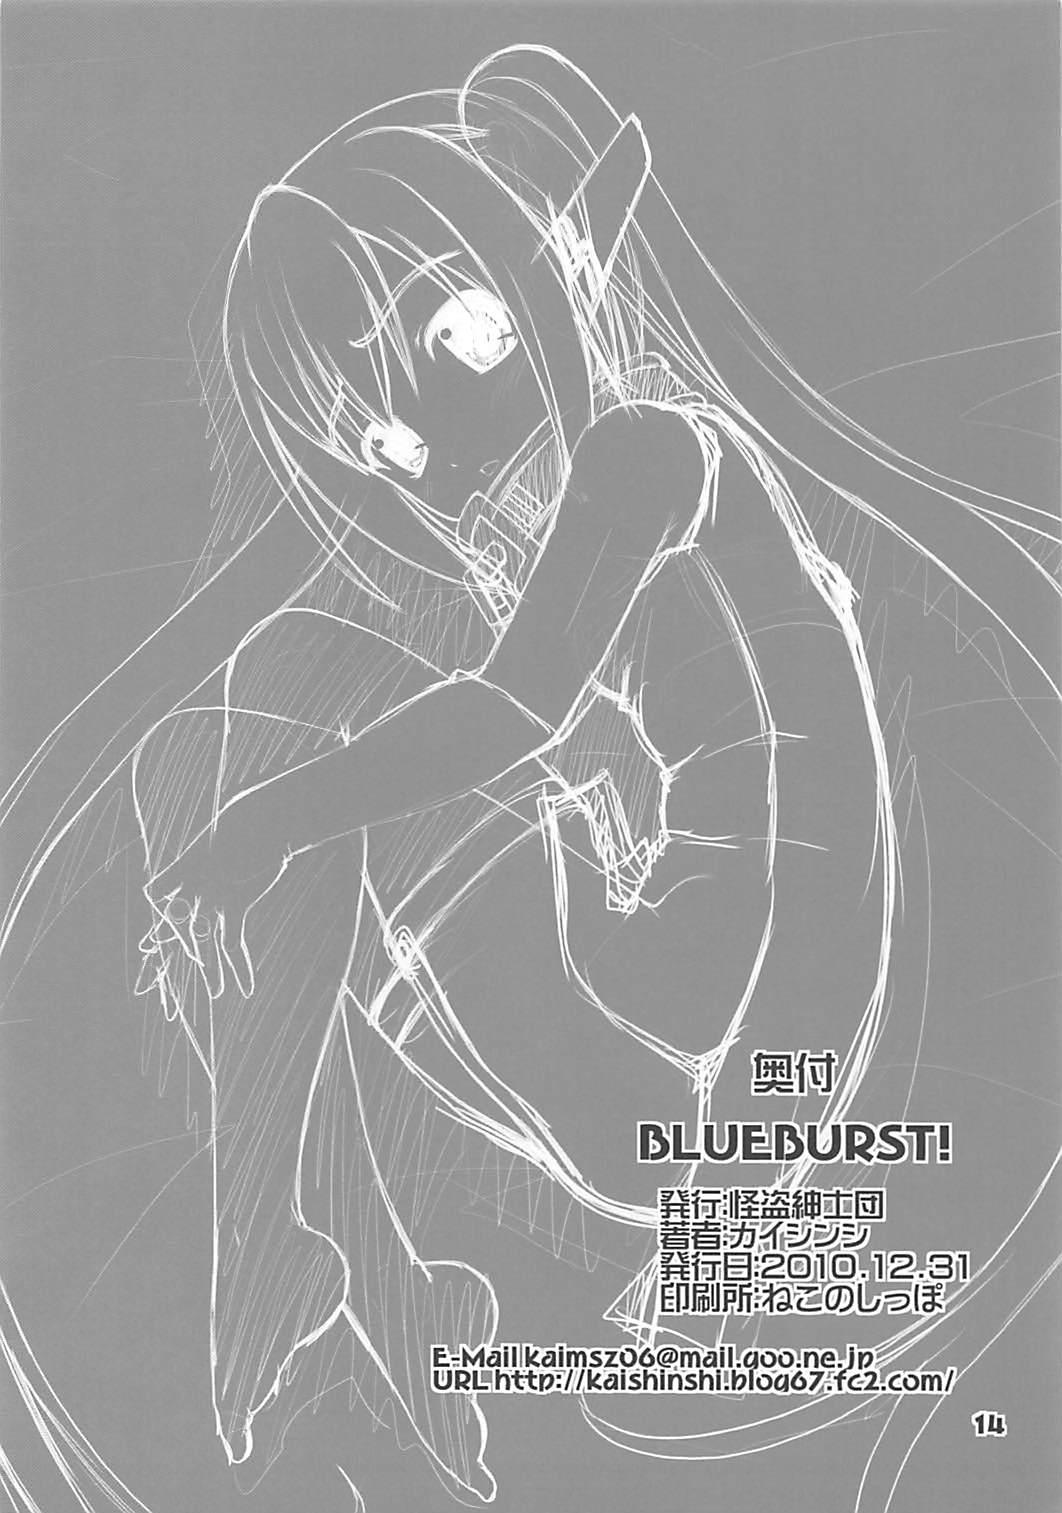 Moaning BLUE BURST! - Sora no otoshimono Rubdown - Page 13